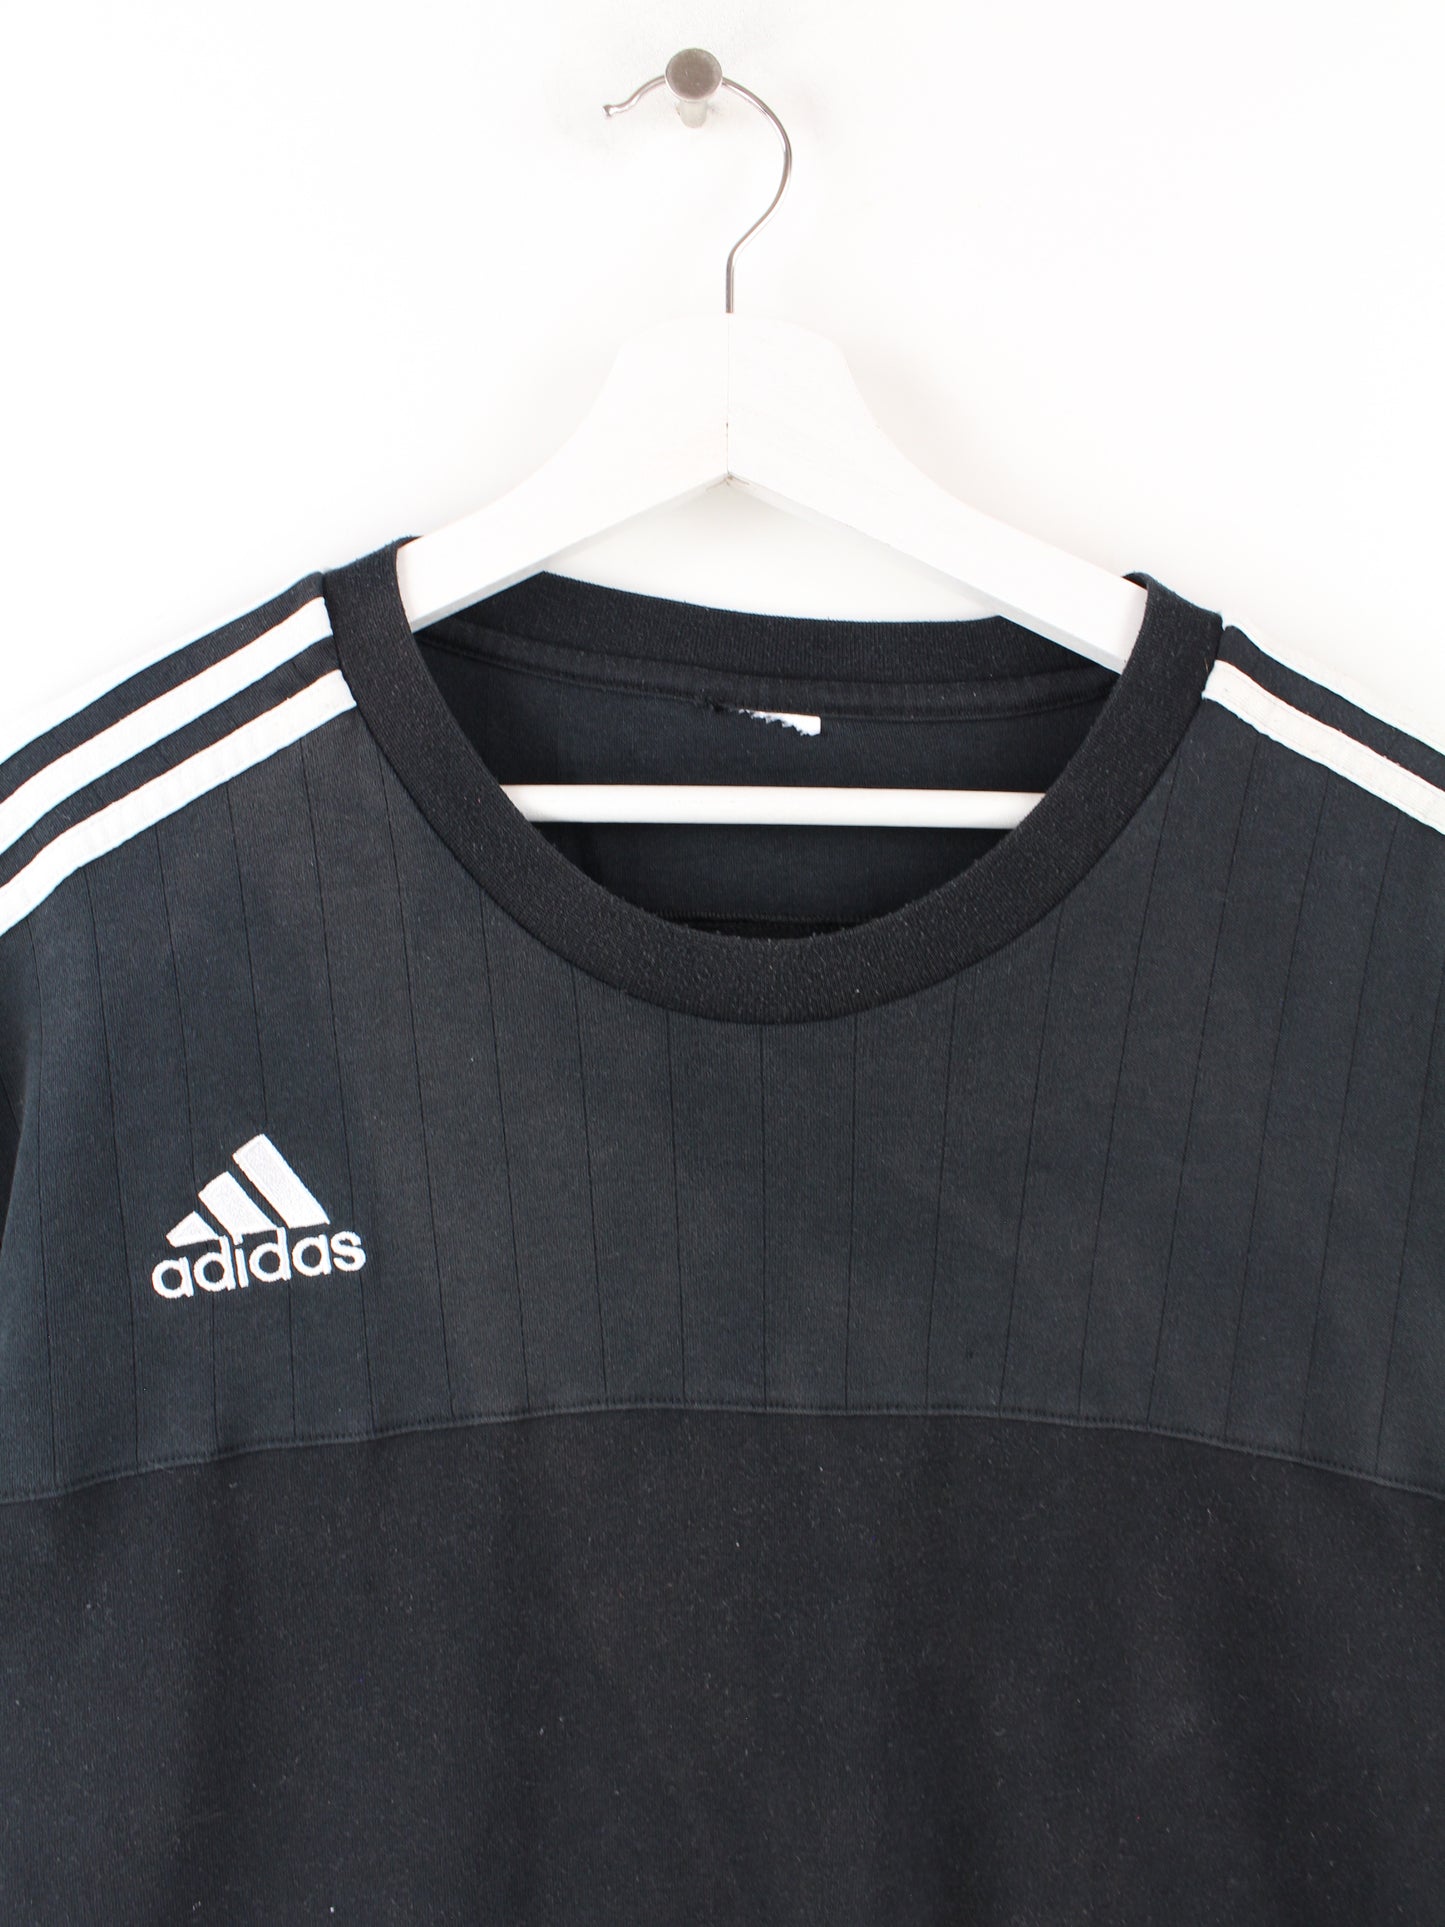 Adidas Basic T-Shirt Black XL